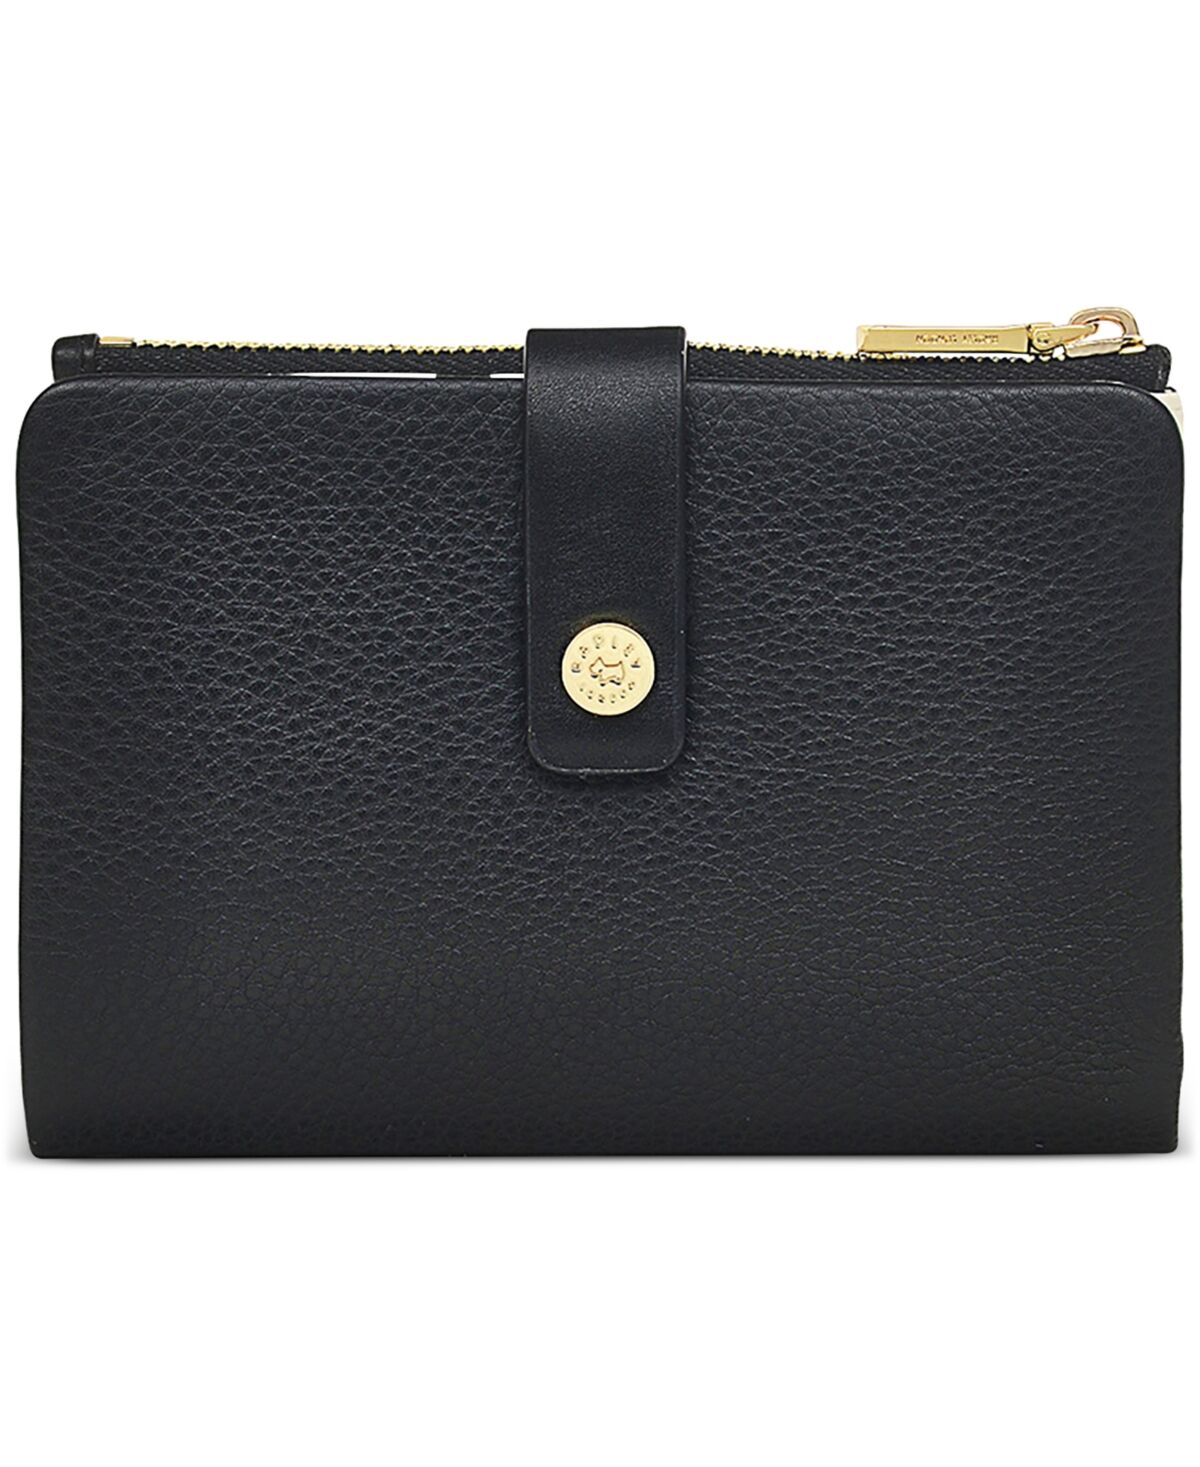 Radley London Leather Medium Bifold Wallet - Black